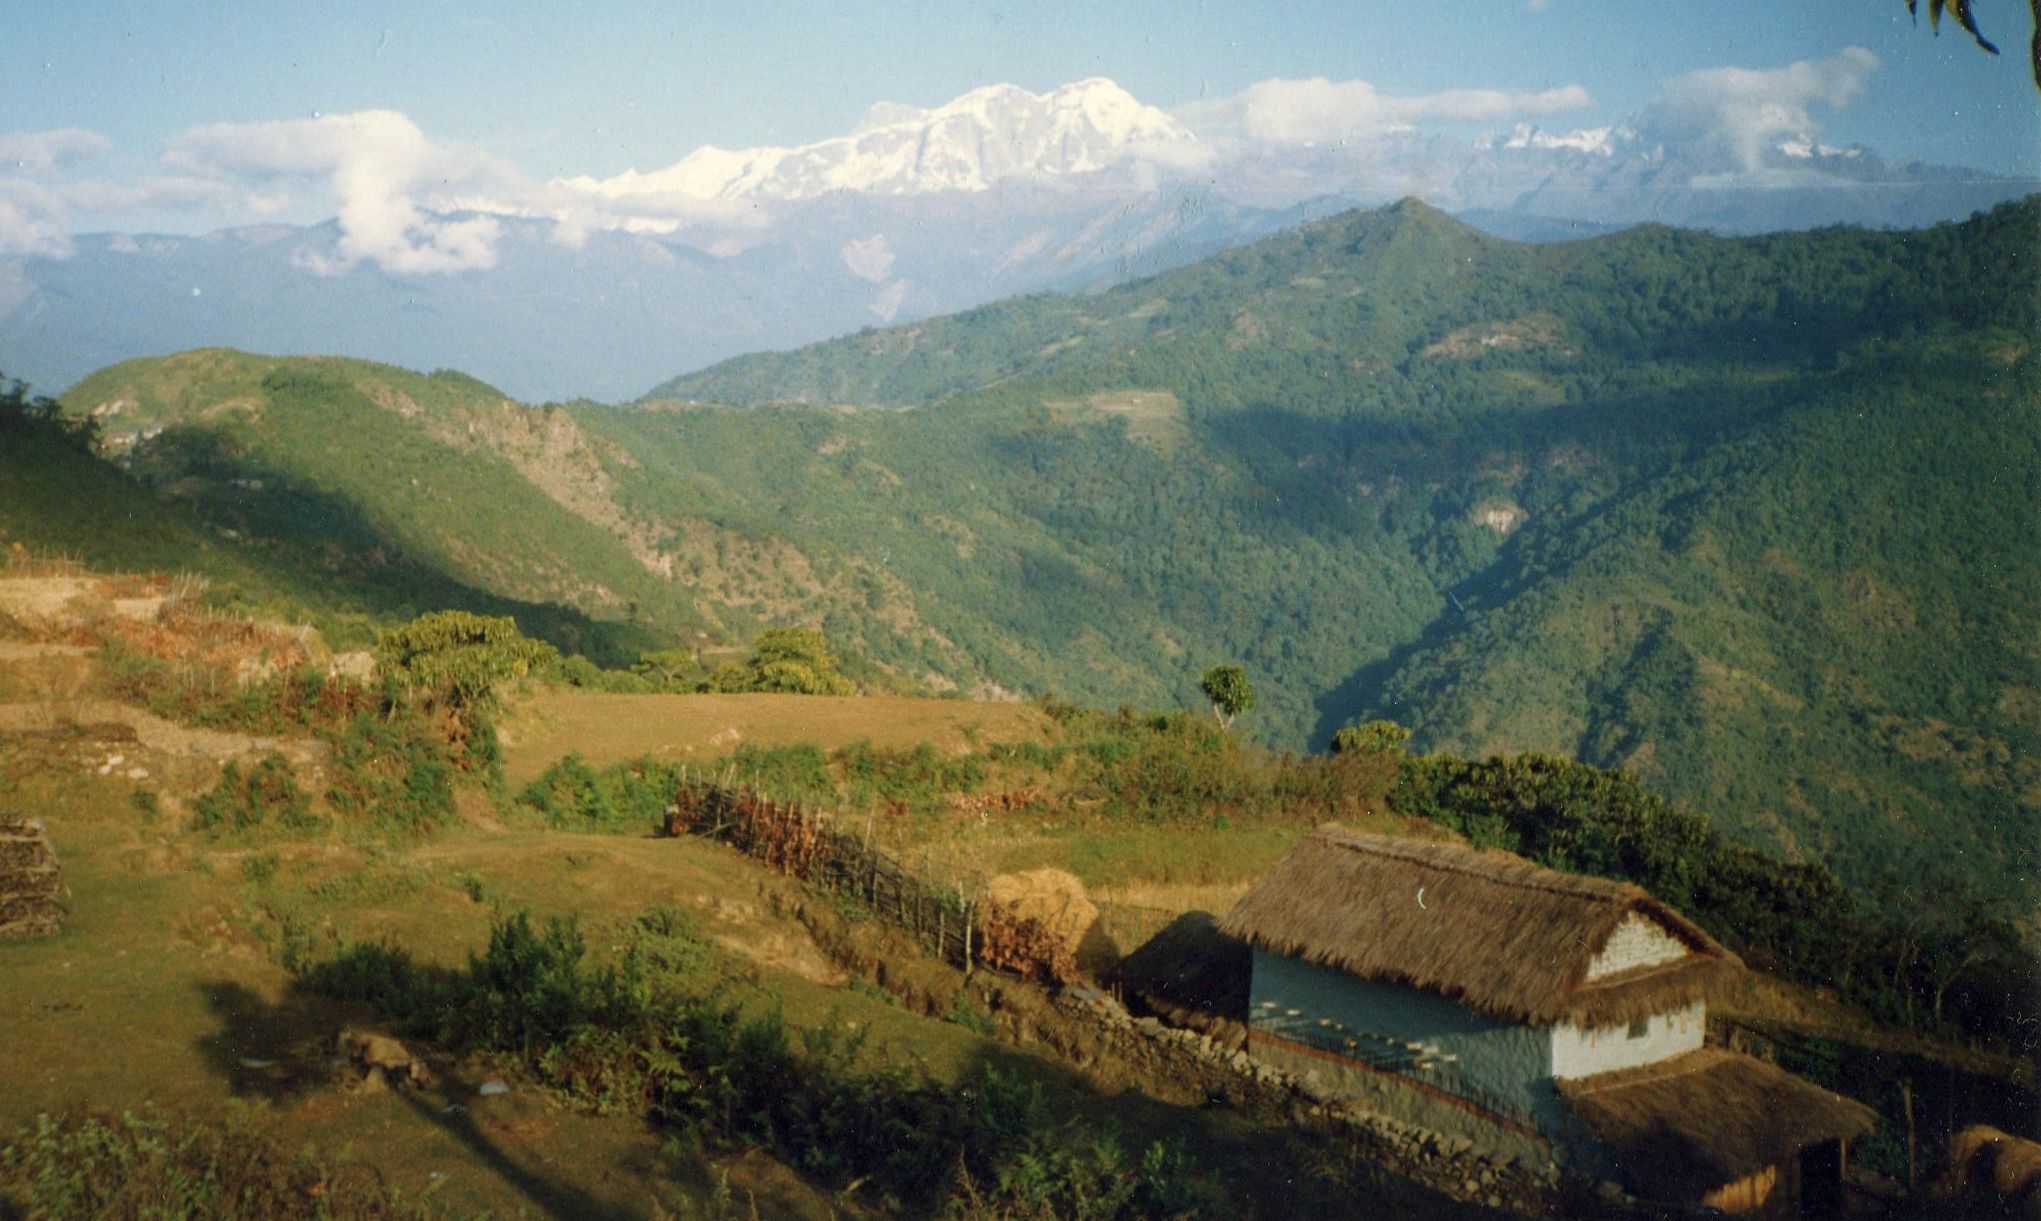 Marsayangdi Valley and the Manaslu Himal